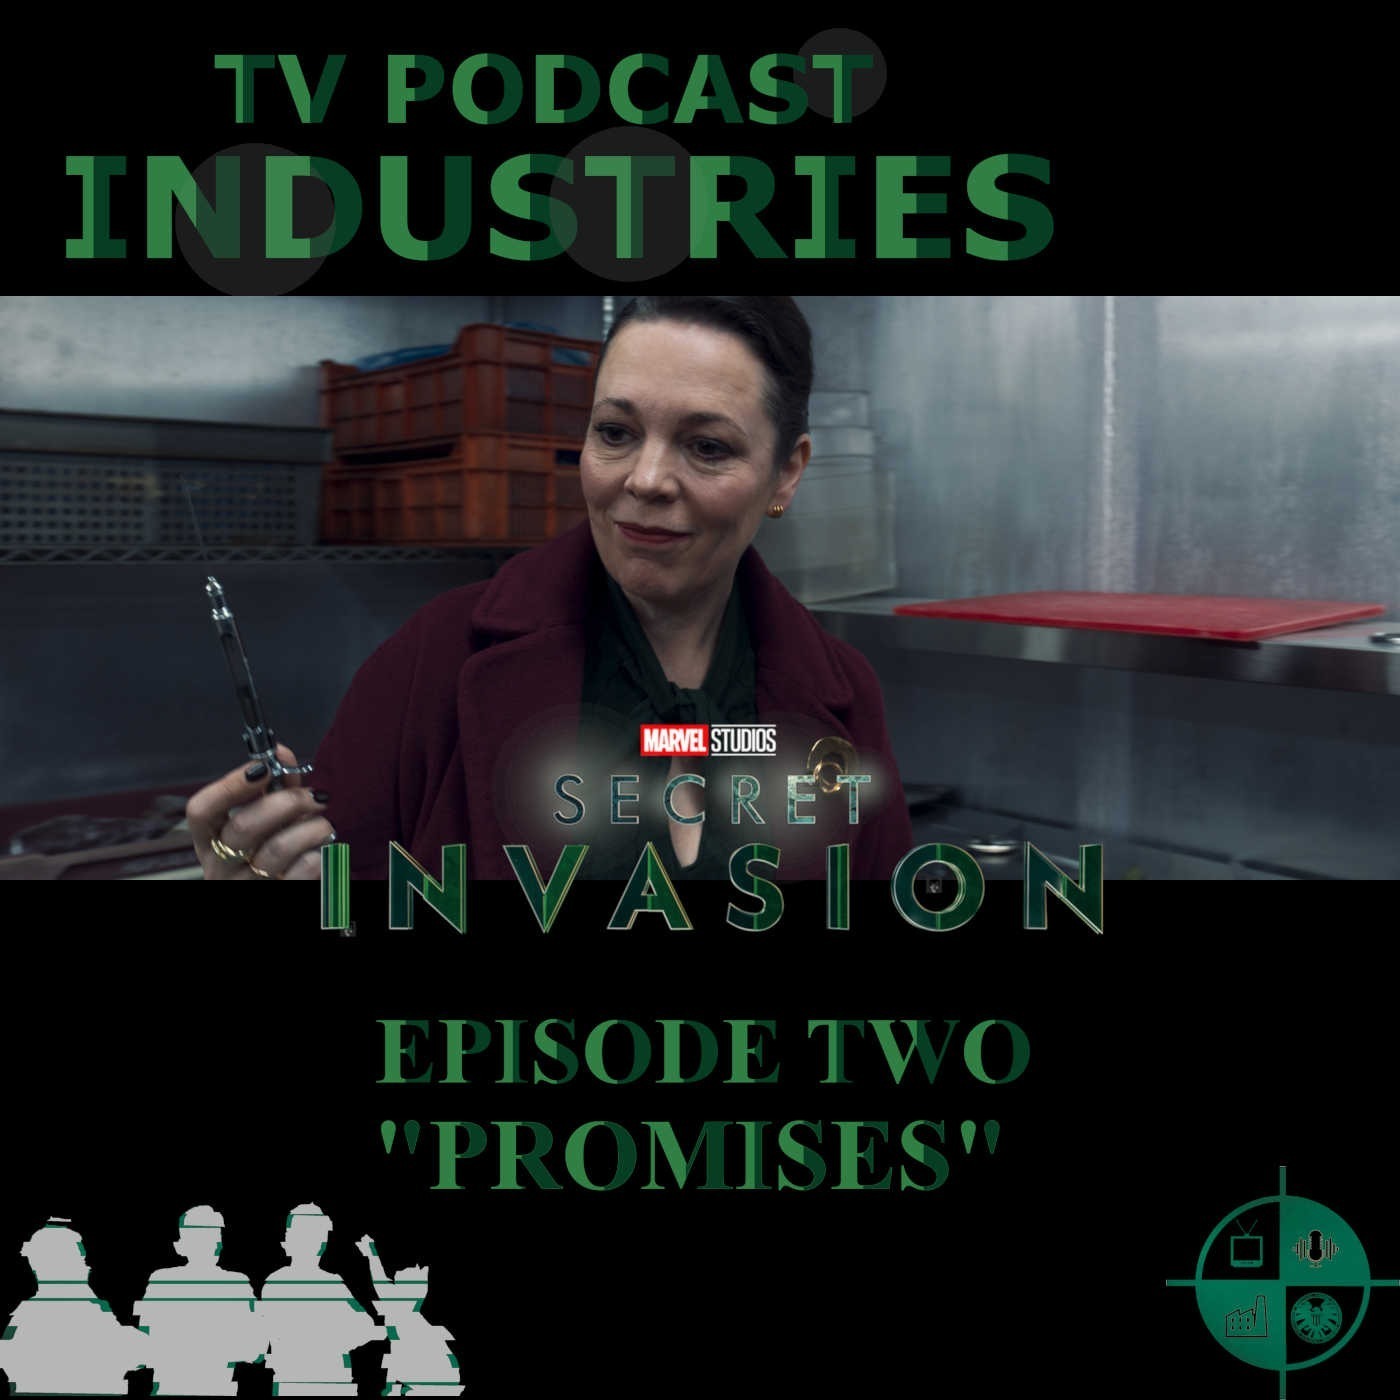 Secret Invasion Episode 2 "Promises" Podcast